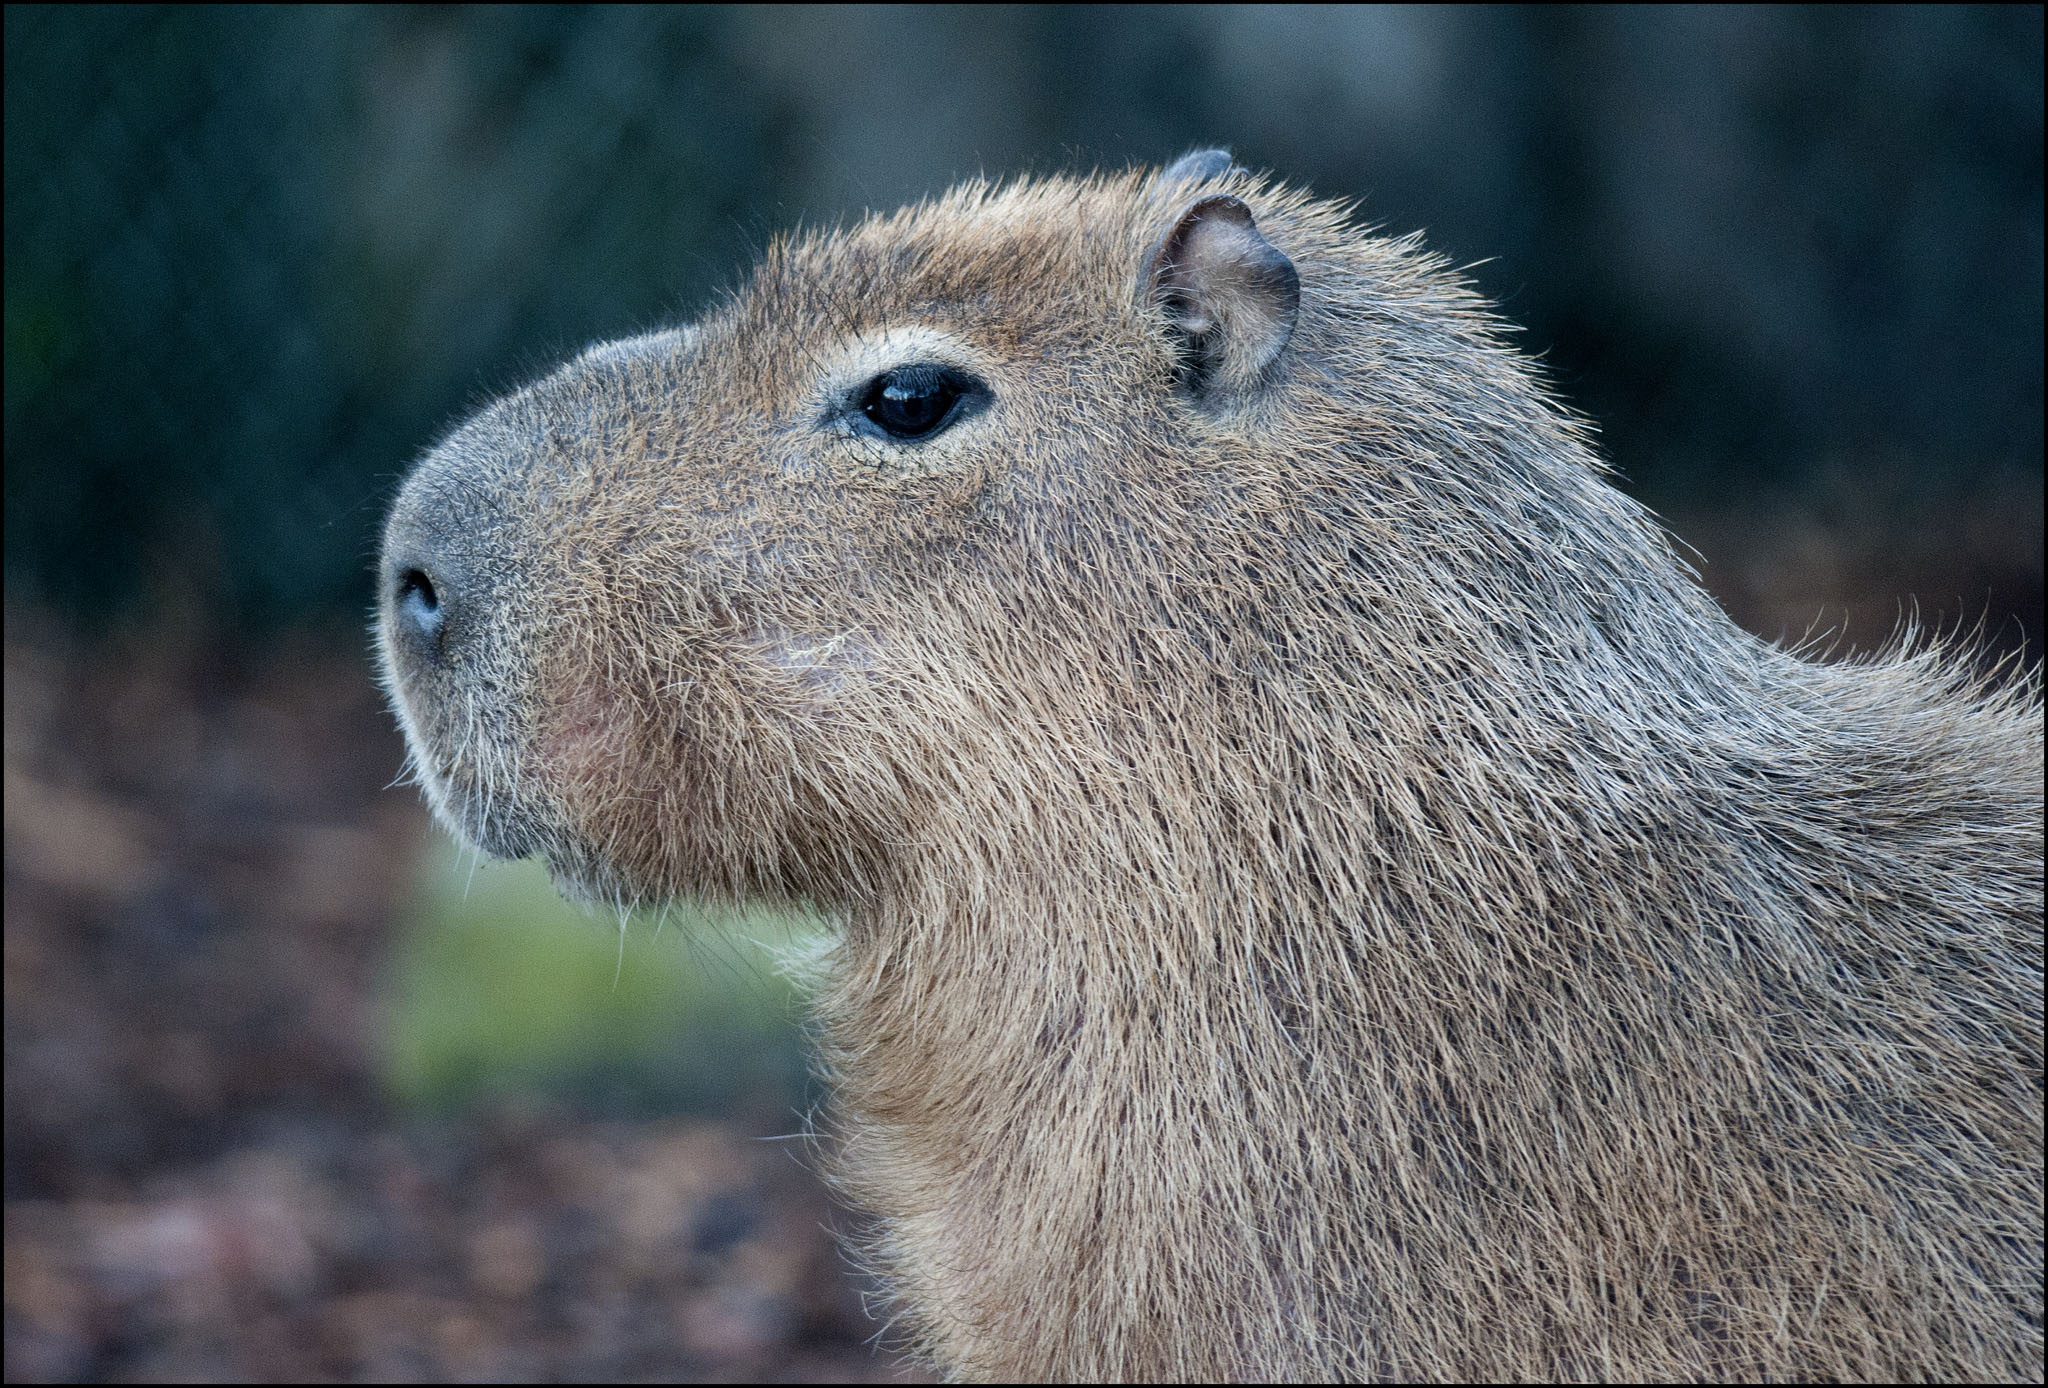 A picture of a Capybara